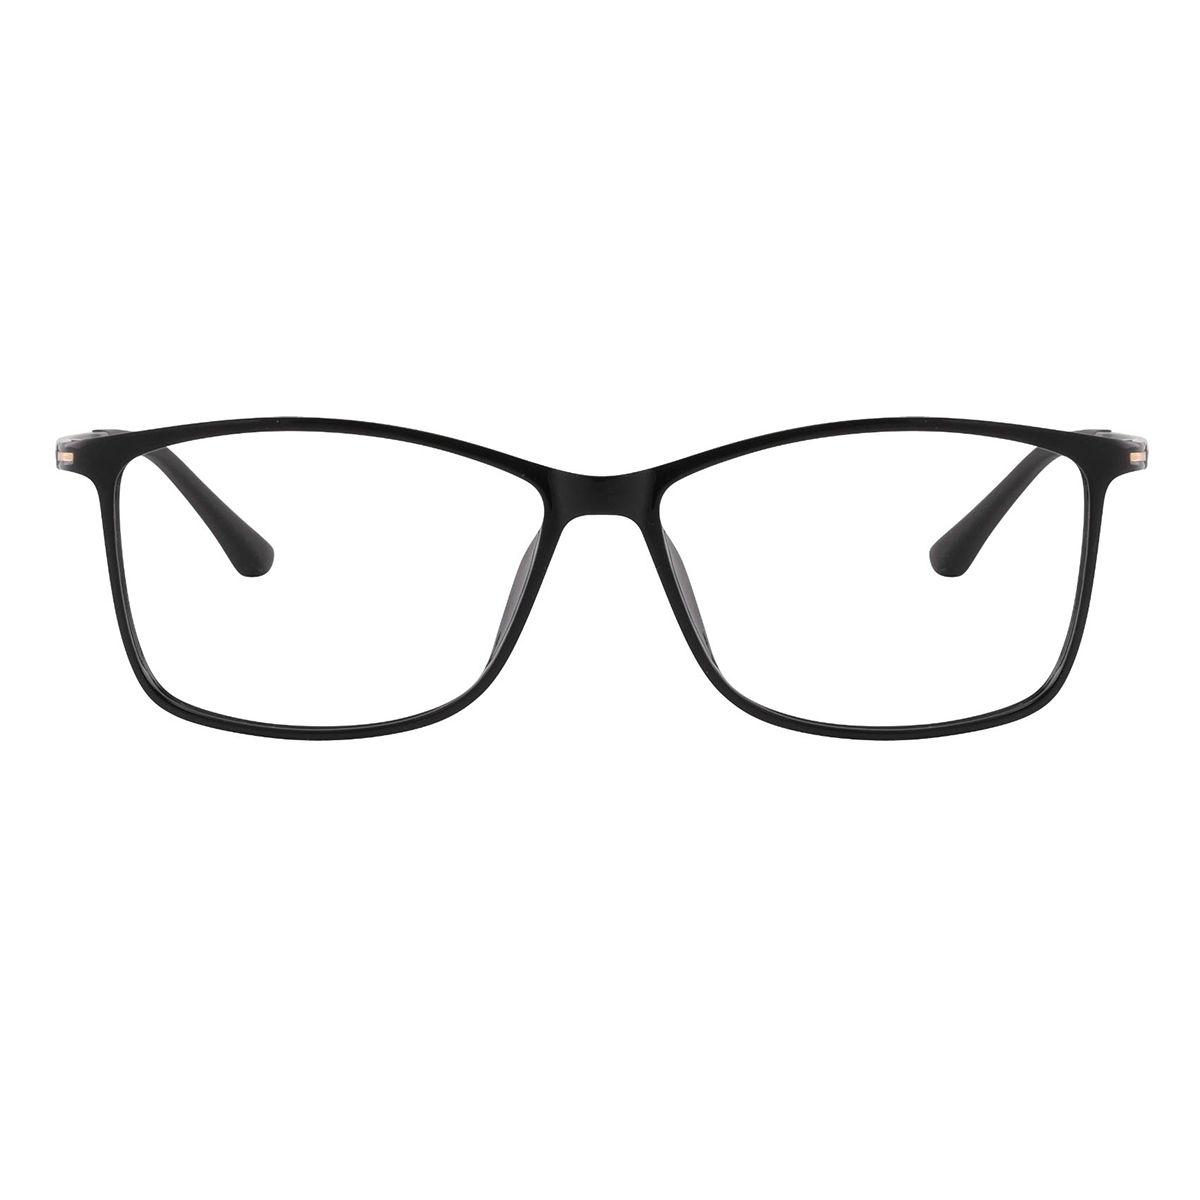 square reading-glasses #25 - black